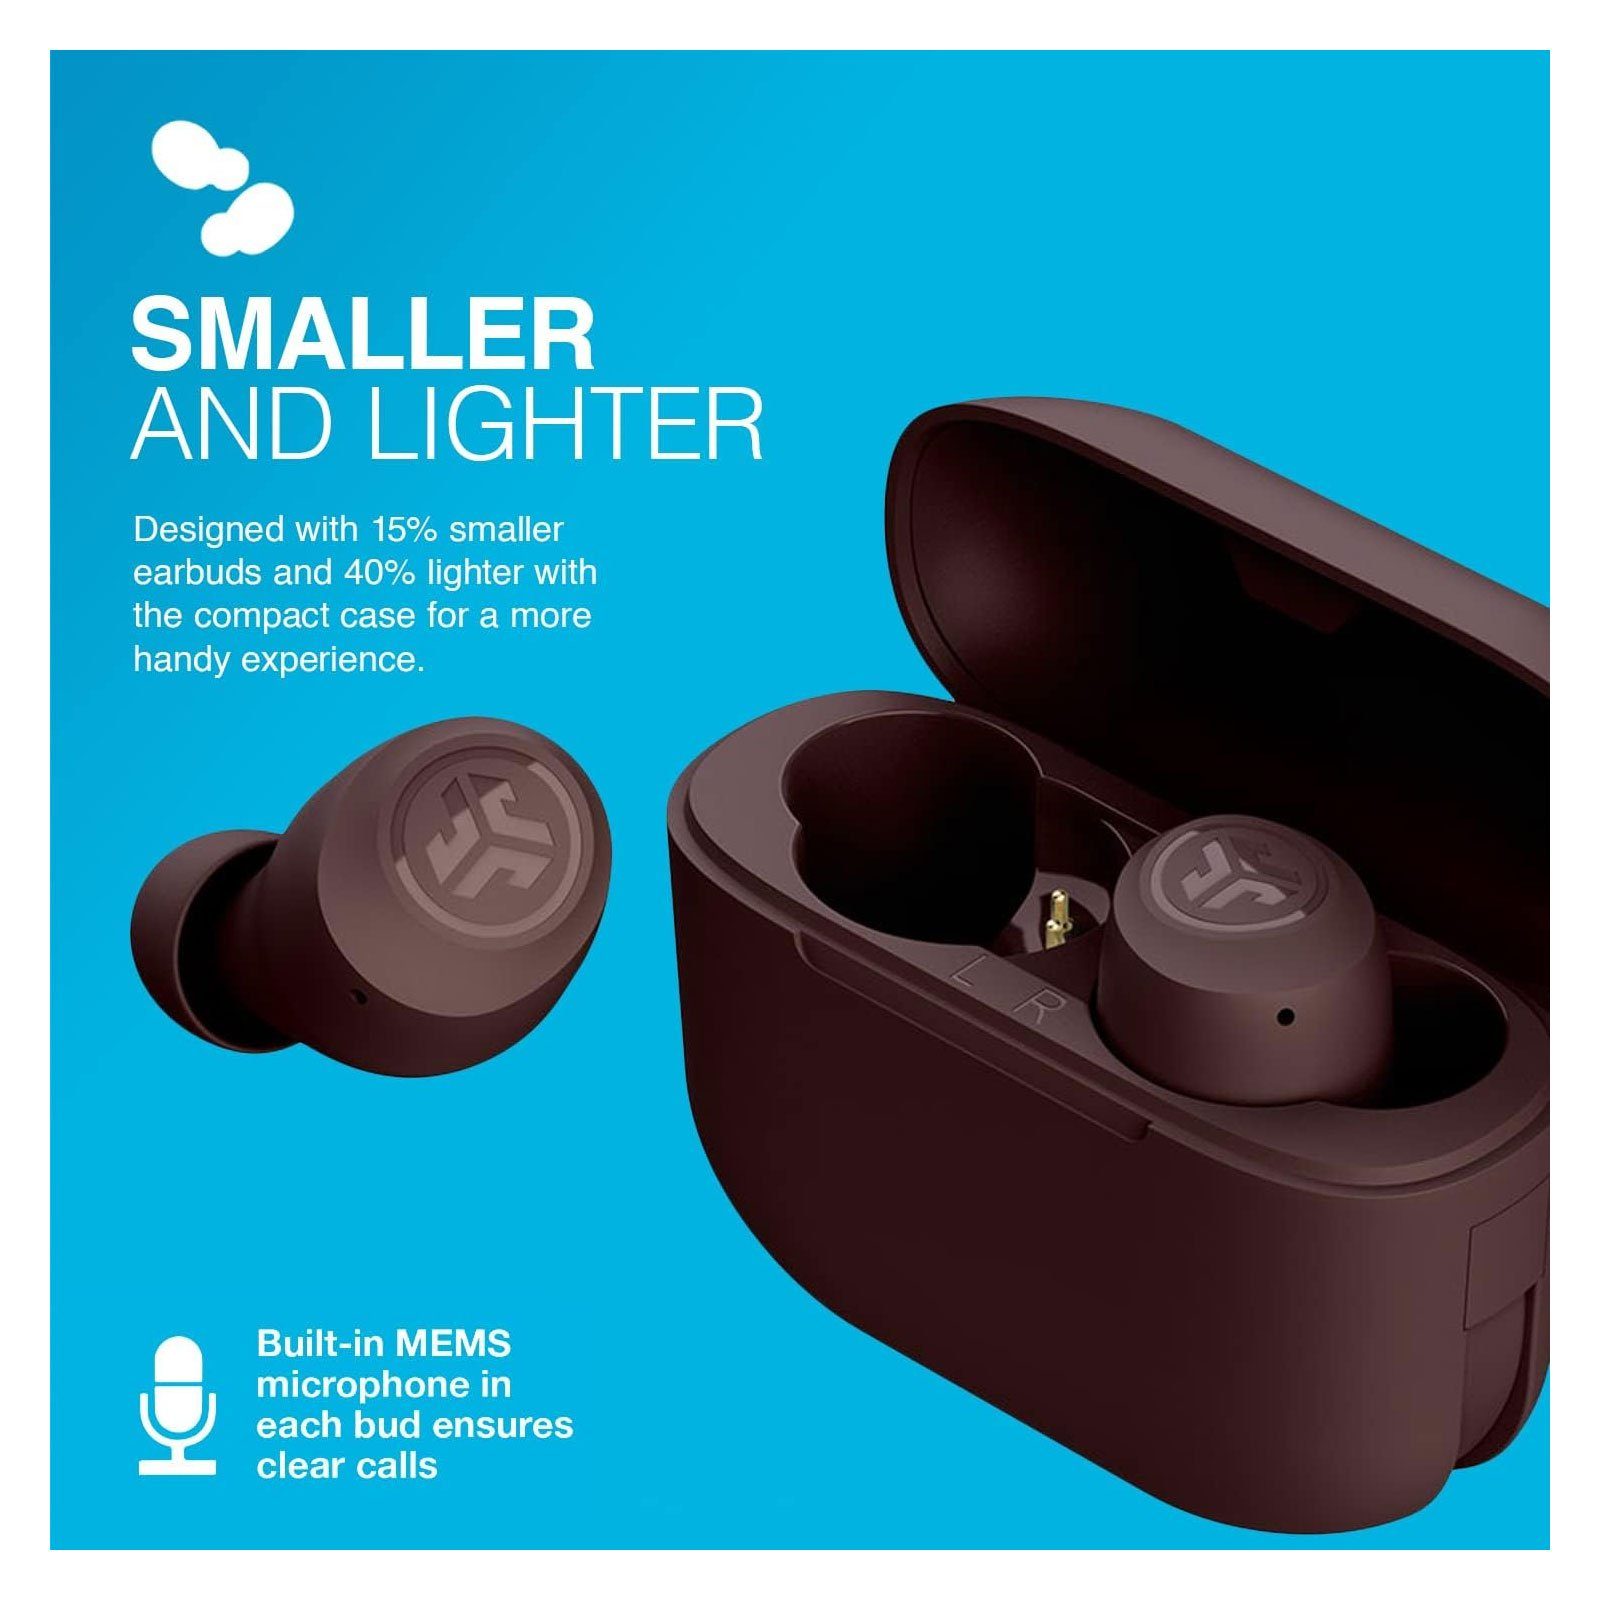 Hauttöne) Go EQ3-Sound, In-Ear-Kopfhörer True Earbuds Air Bluetooth, USB-Ladecase, Jlab 4975 Tones Pantone Touch, Wireless (TWS,